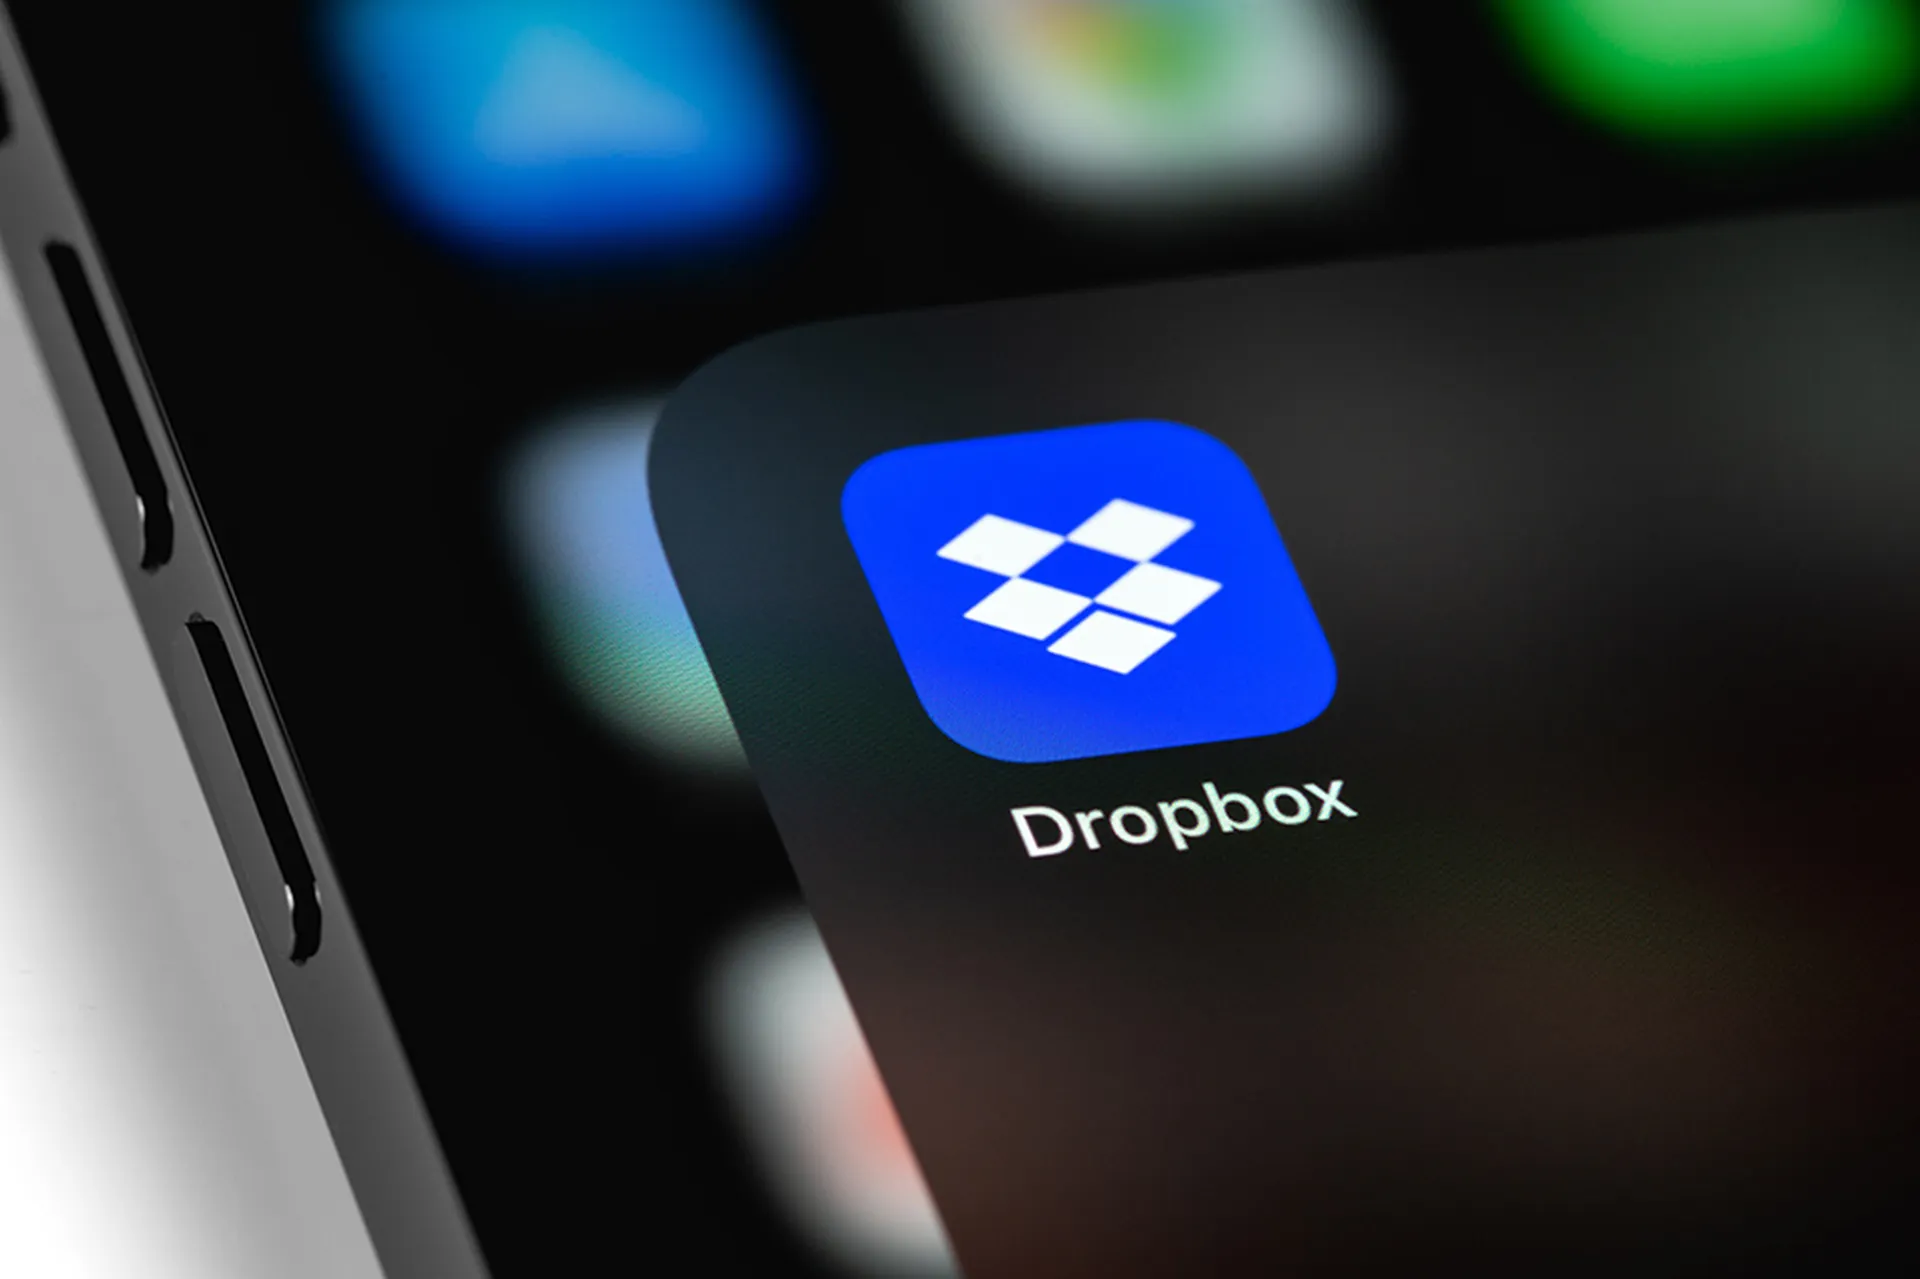 Dropbox mobile icon app on screen smartphone iPhone. Dropbox is file hosting company Dropbox Inc.